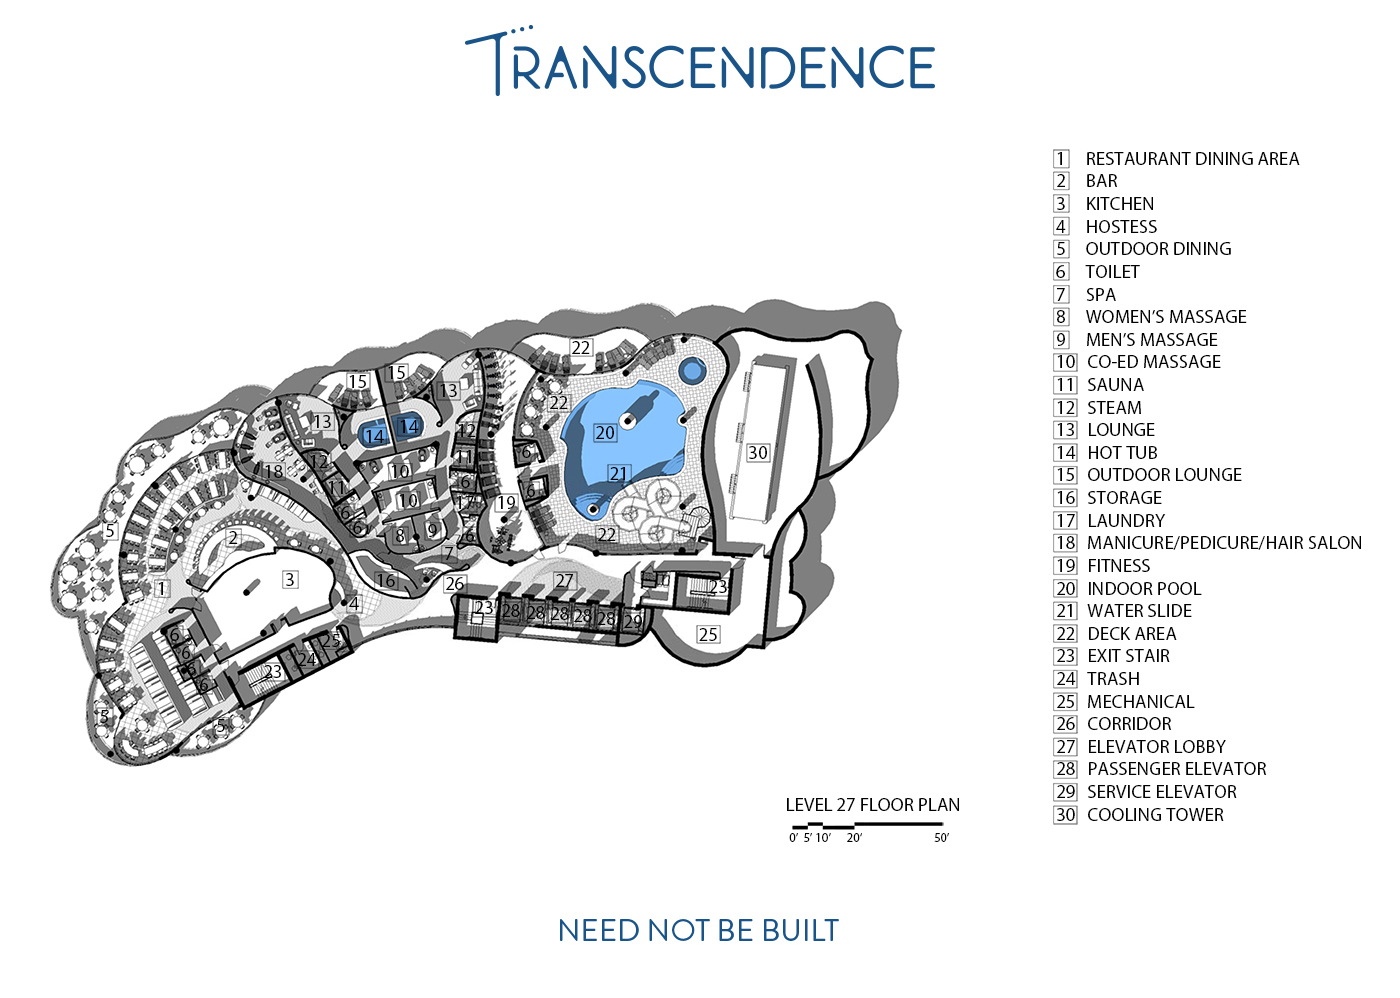 Transcendence Condos Seamitchell.com